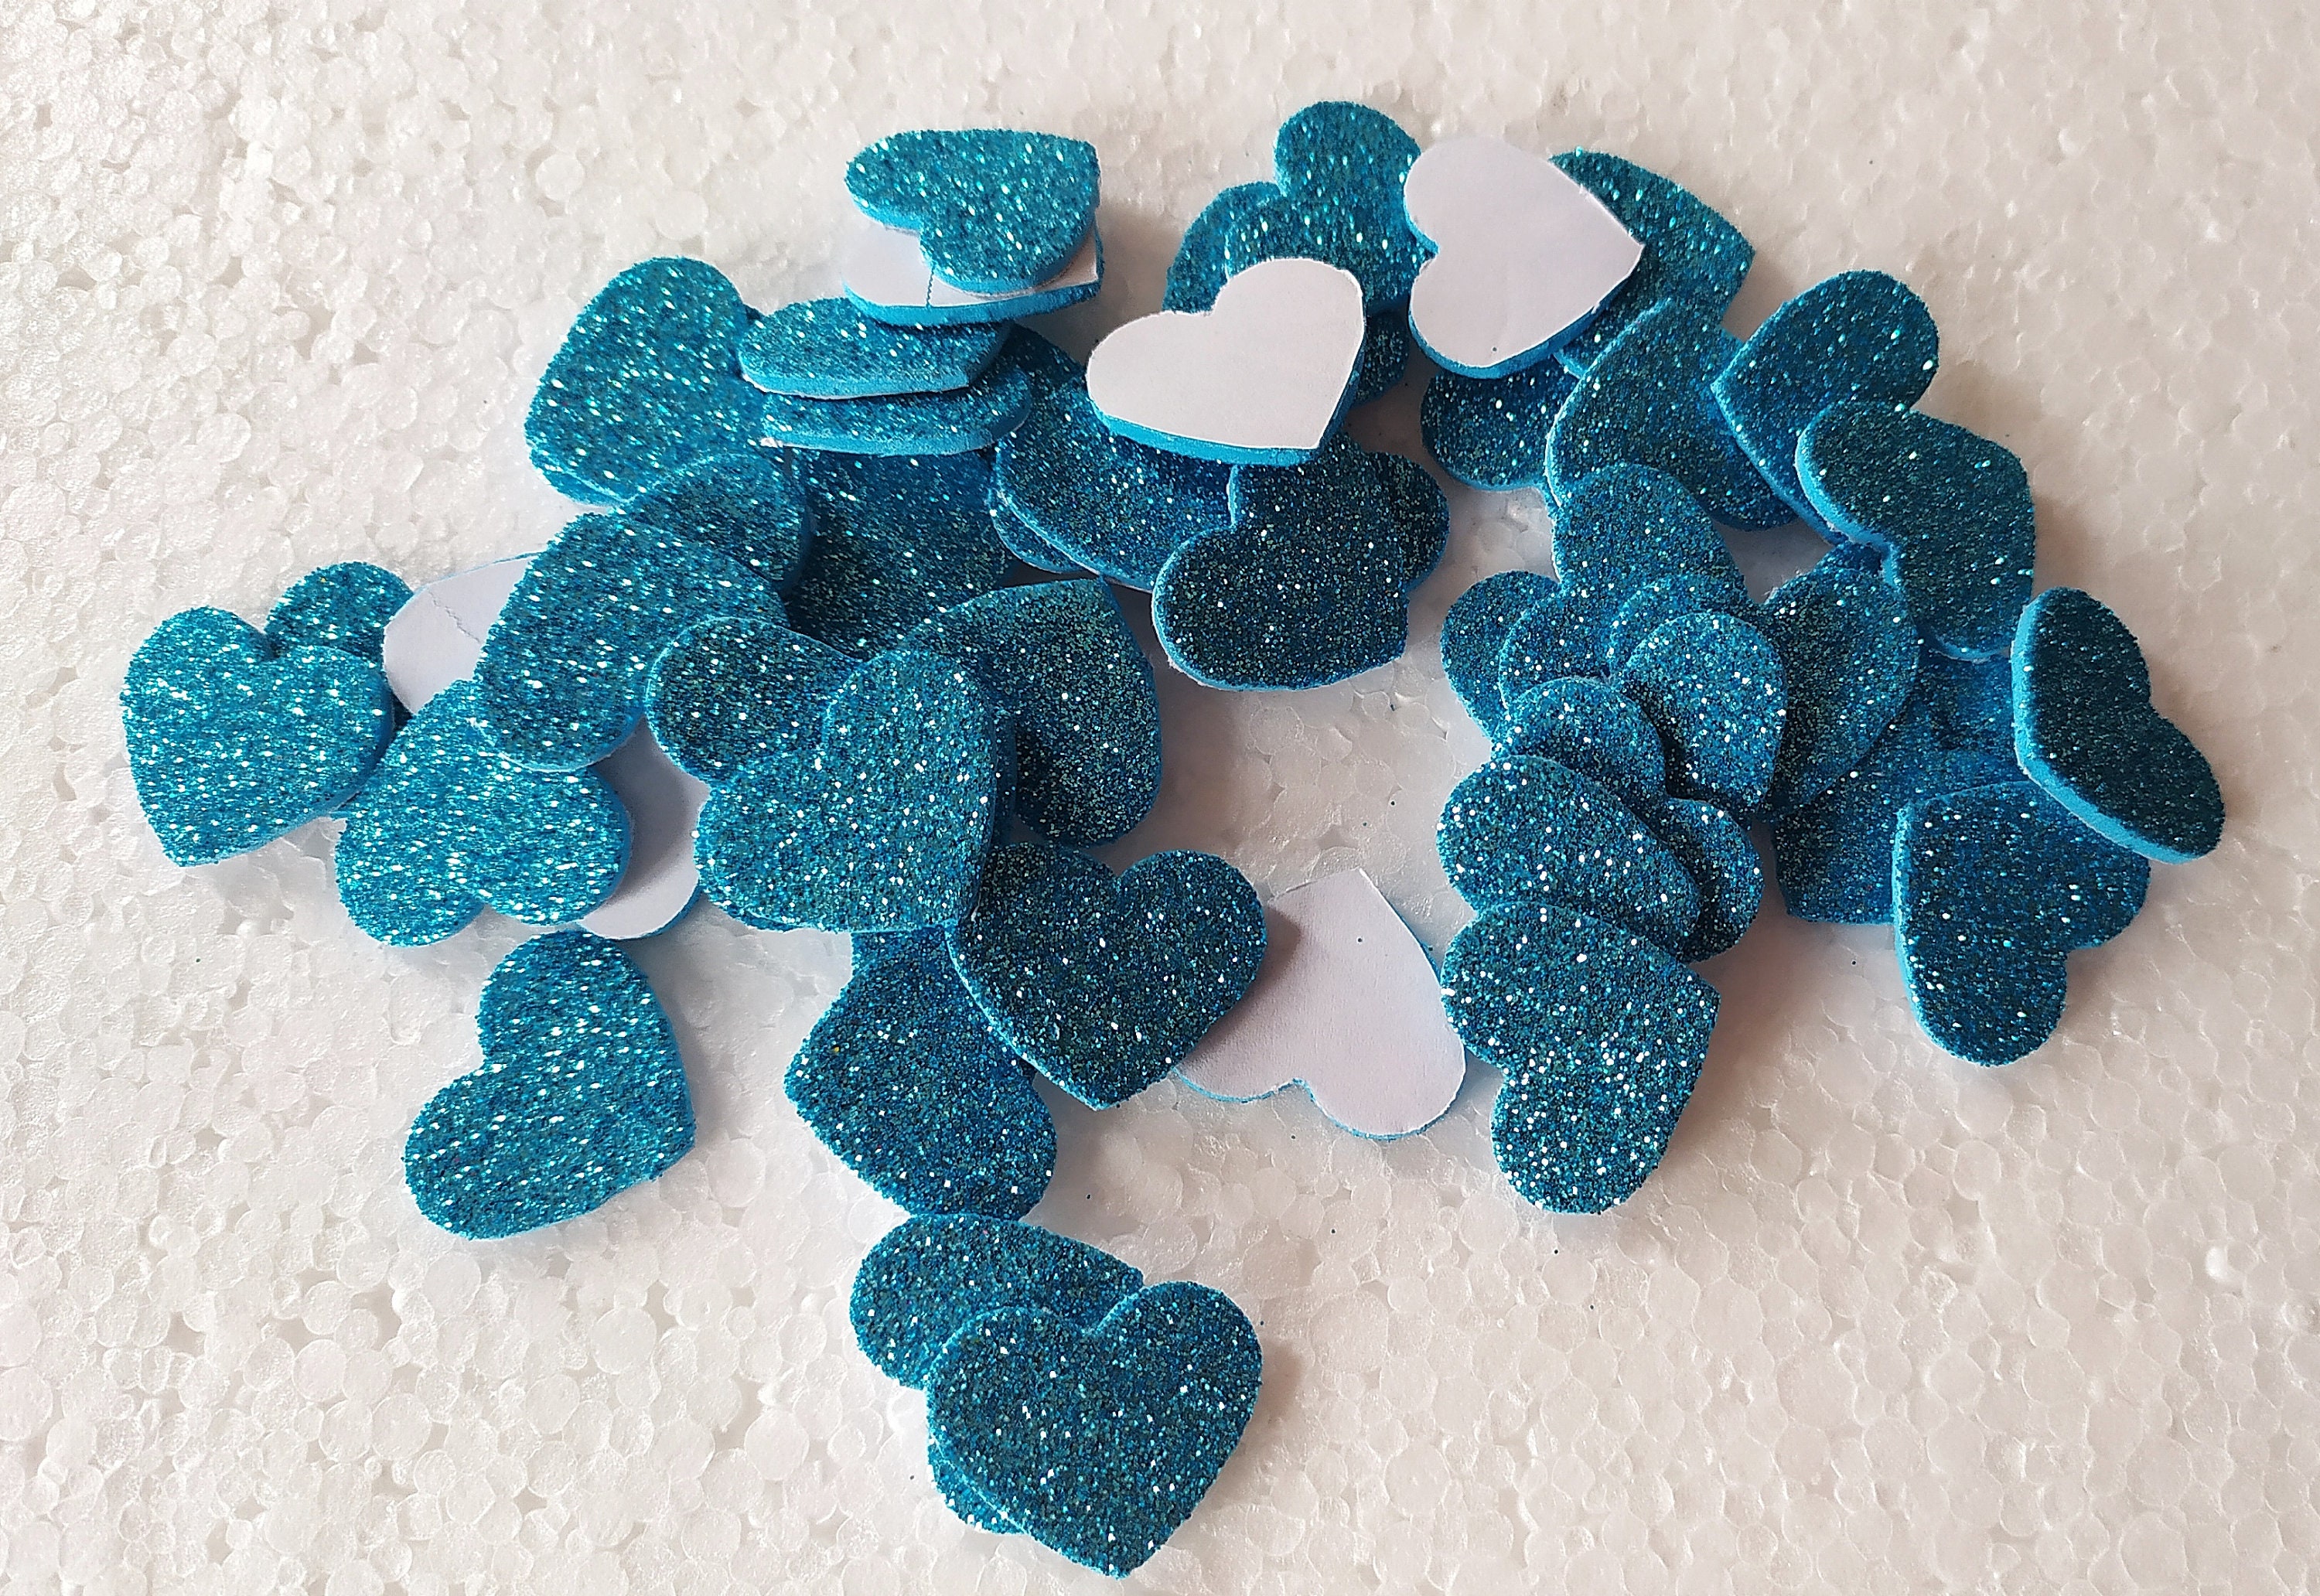 50 Pieces Foam Heart Glitter Stickers Stickers Ornament Gift